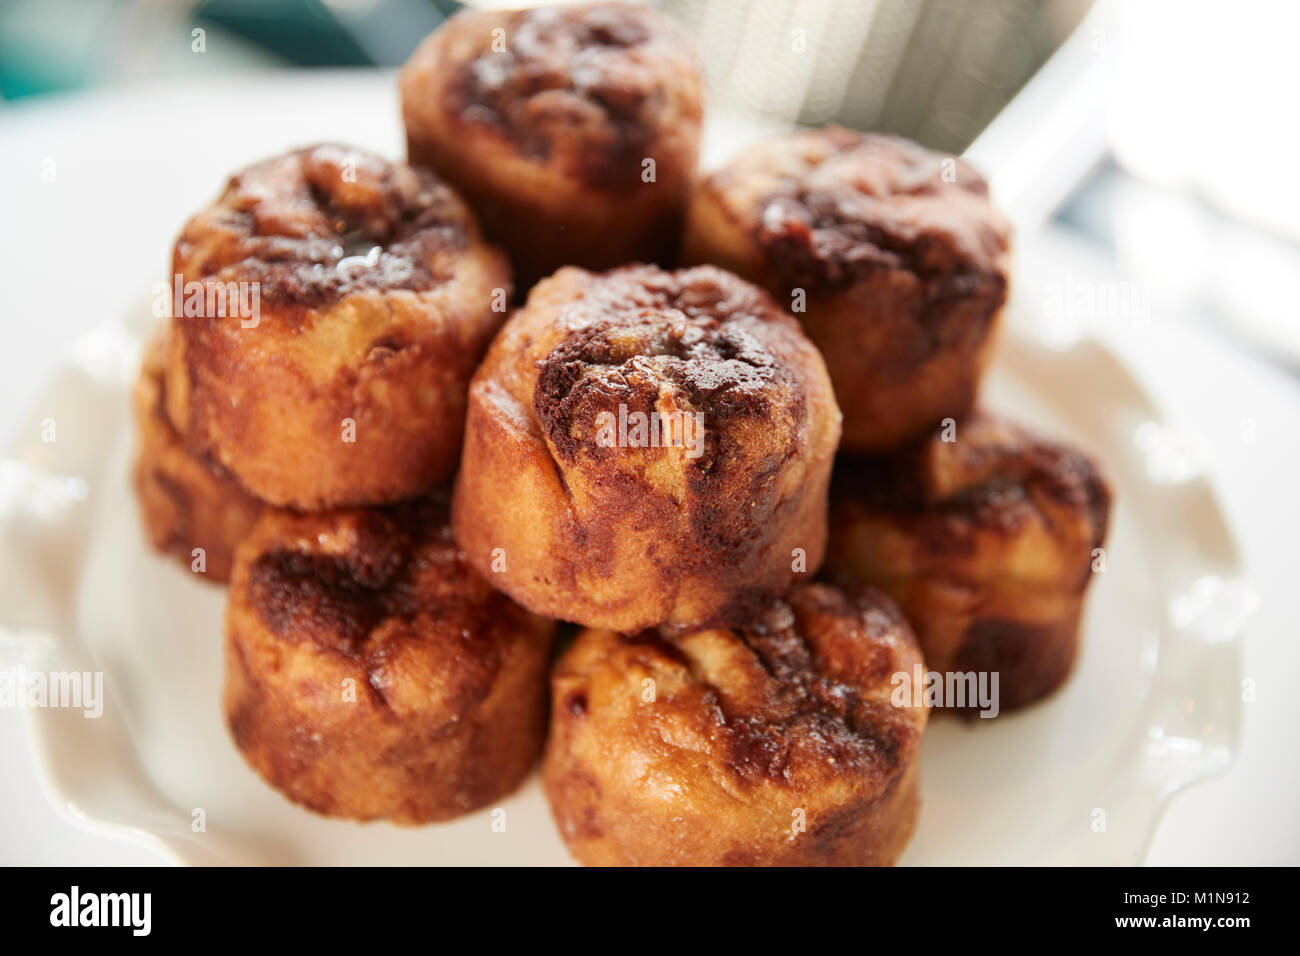 Display Of Freshly Baked Cinnamon Buns In Coffee Shop Stock Photo